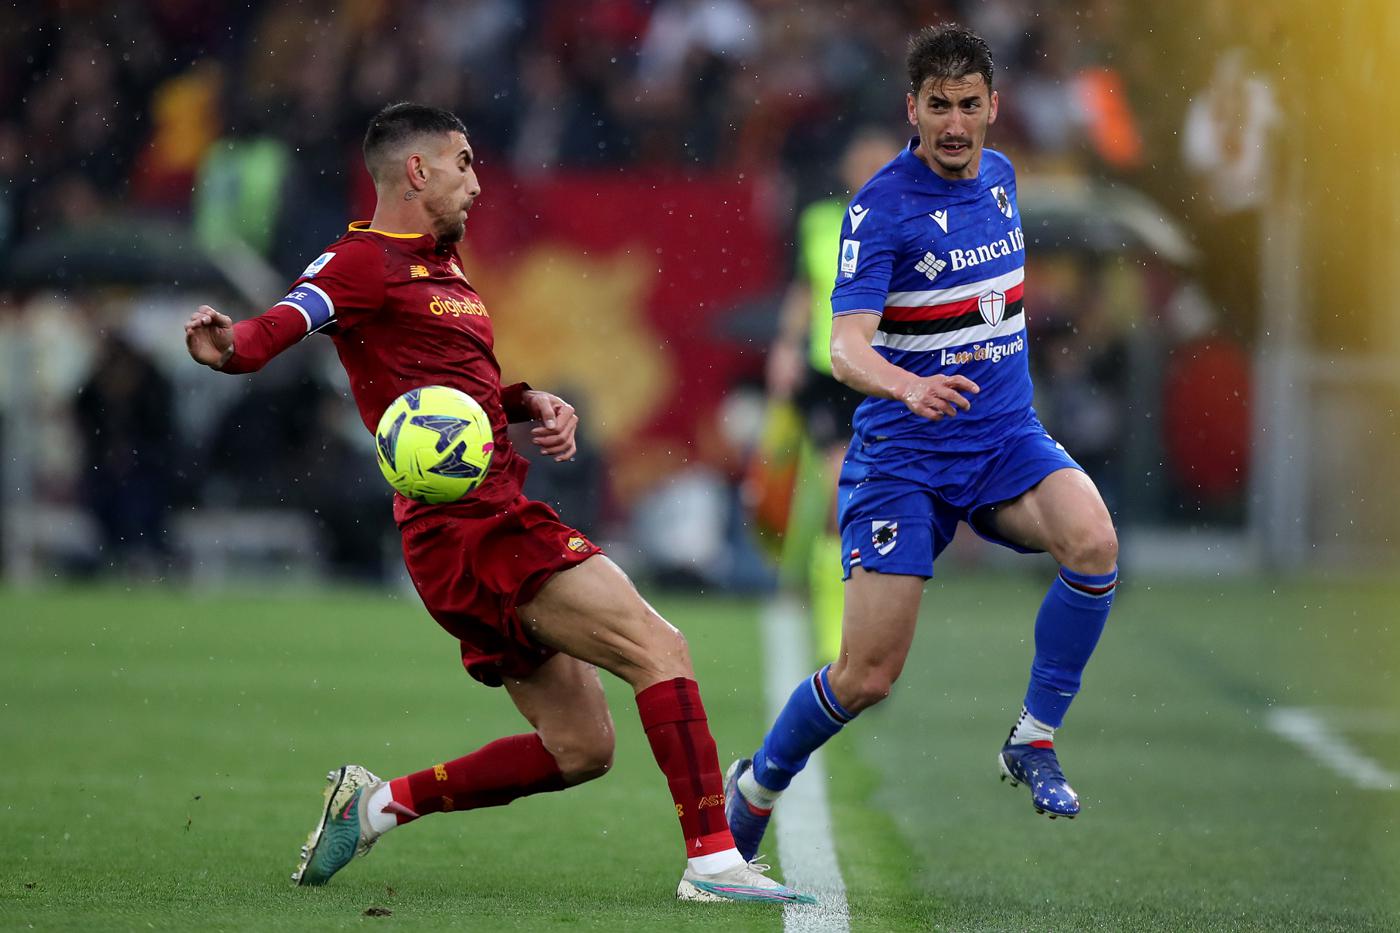 Roma - Sampdoria - 3:0. Italian Championship, 28th round. Match review, statistics